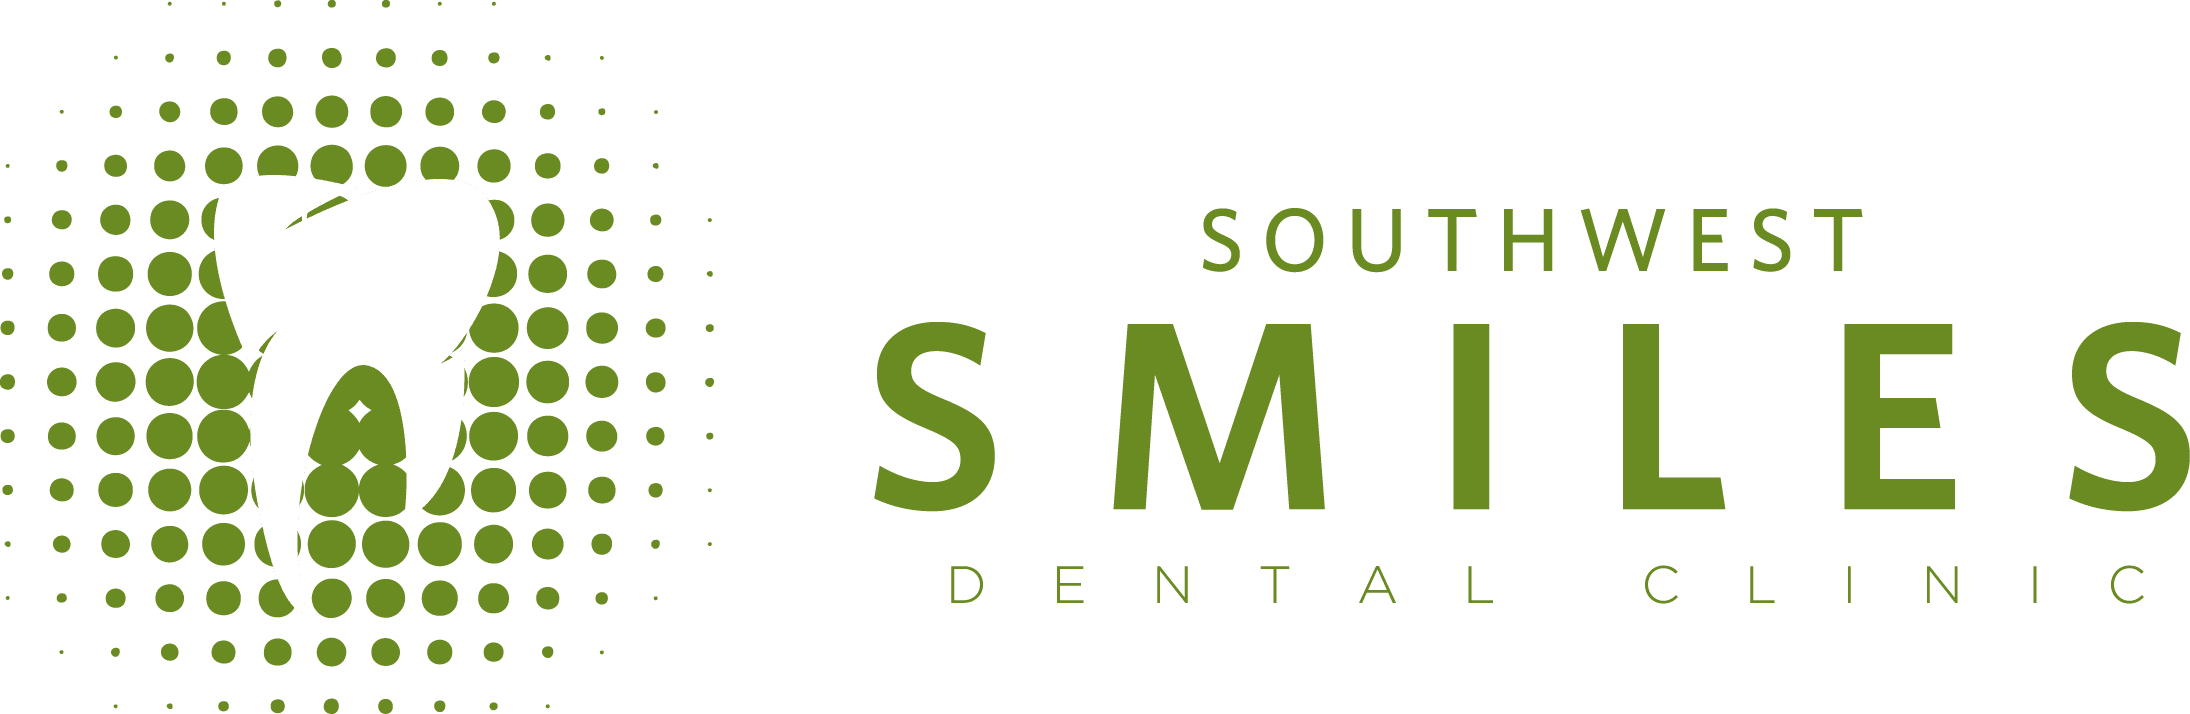 Southwest Smiles Dental Clinic